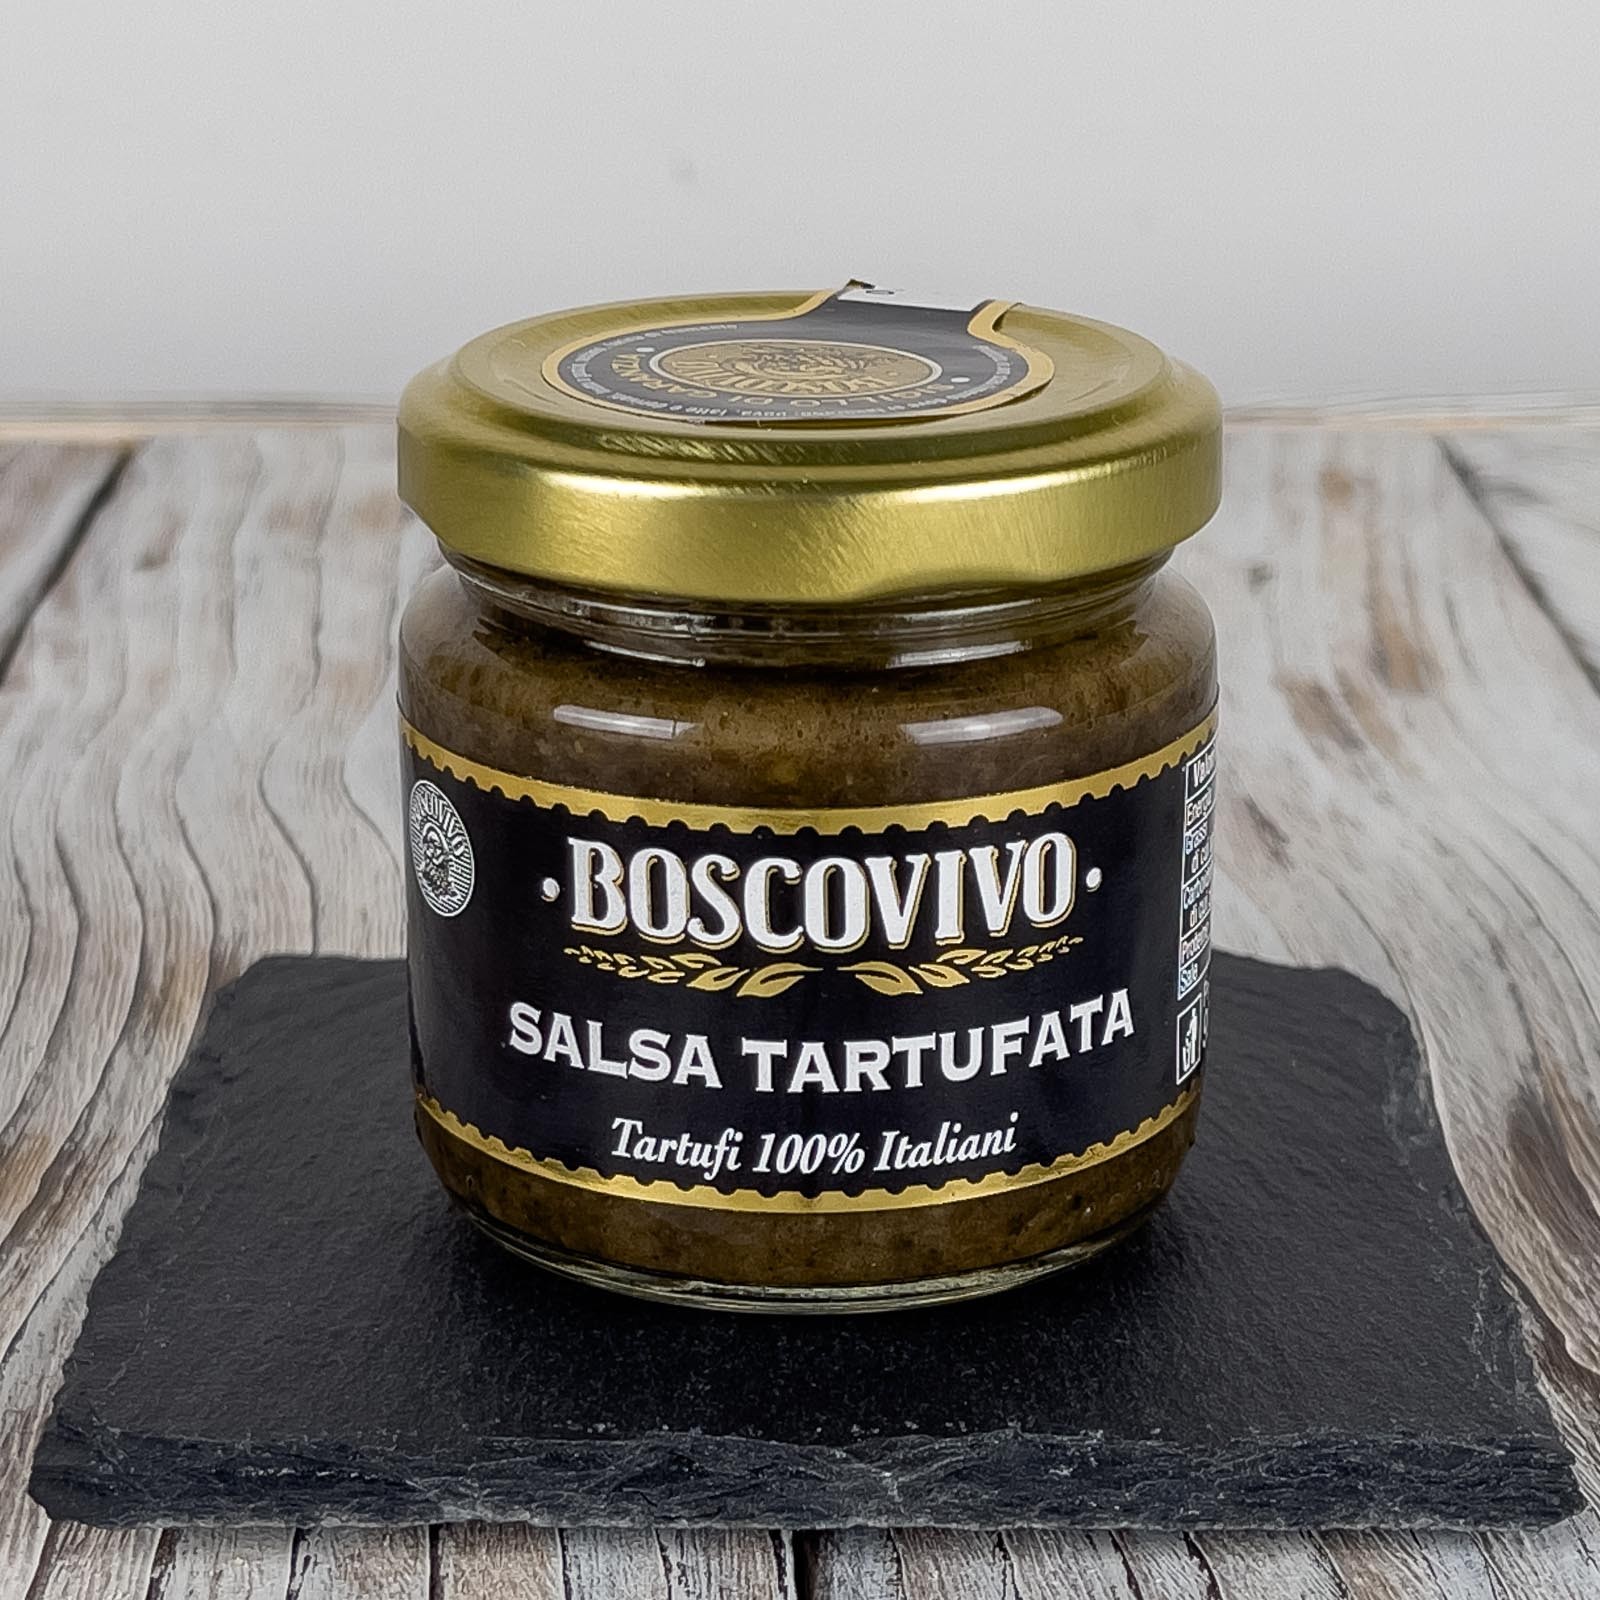 Black Summer Truffle Sauce - Tuber Aestivum Vitt. - 100% Italian.